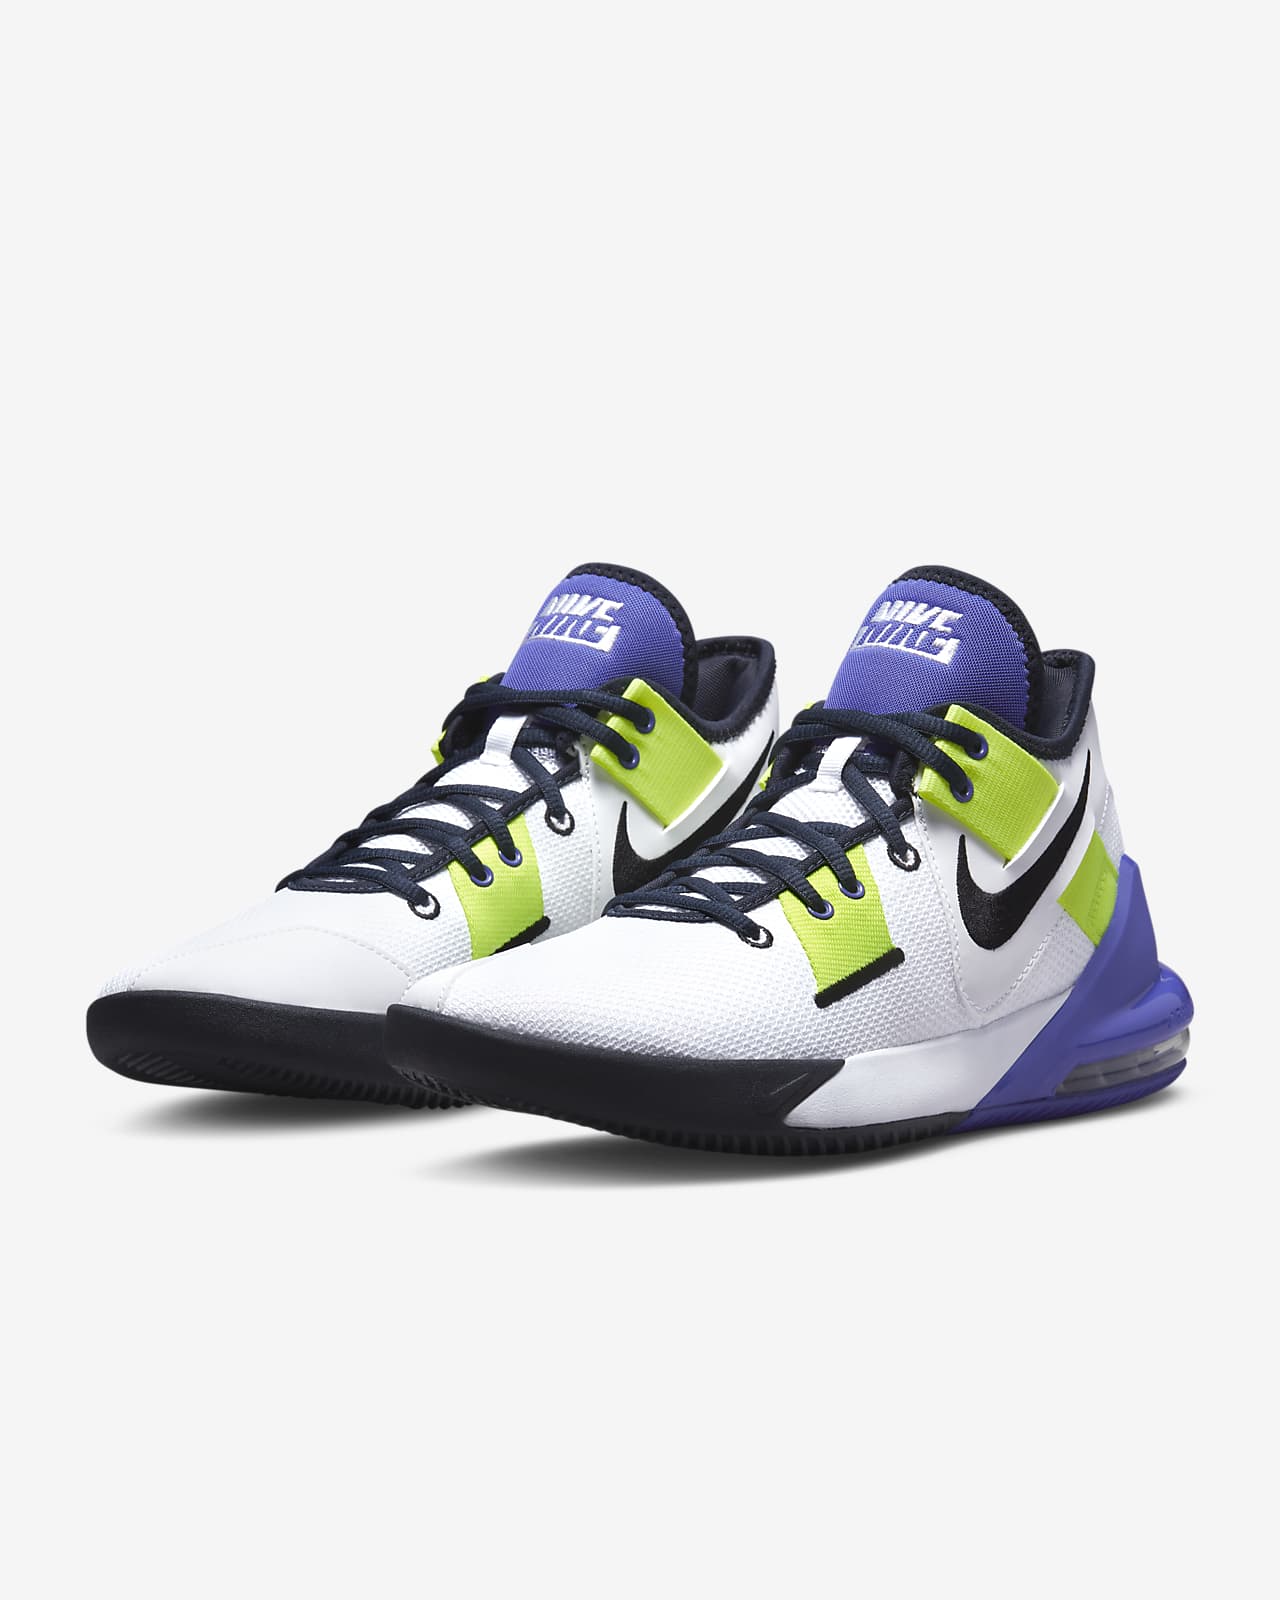 Nike Air Max Impact 2 Basketball Shoes صور كرتونية للأطفال